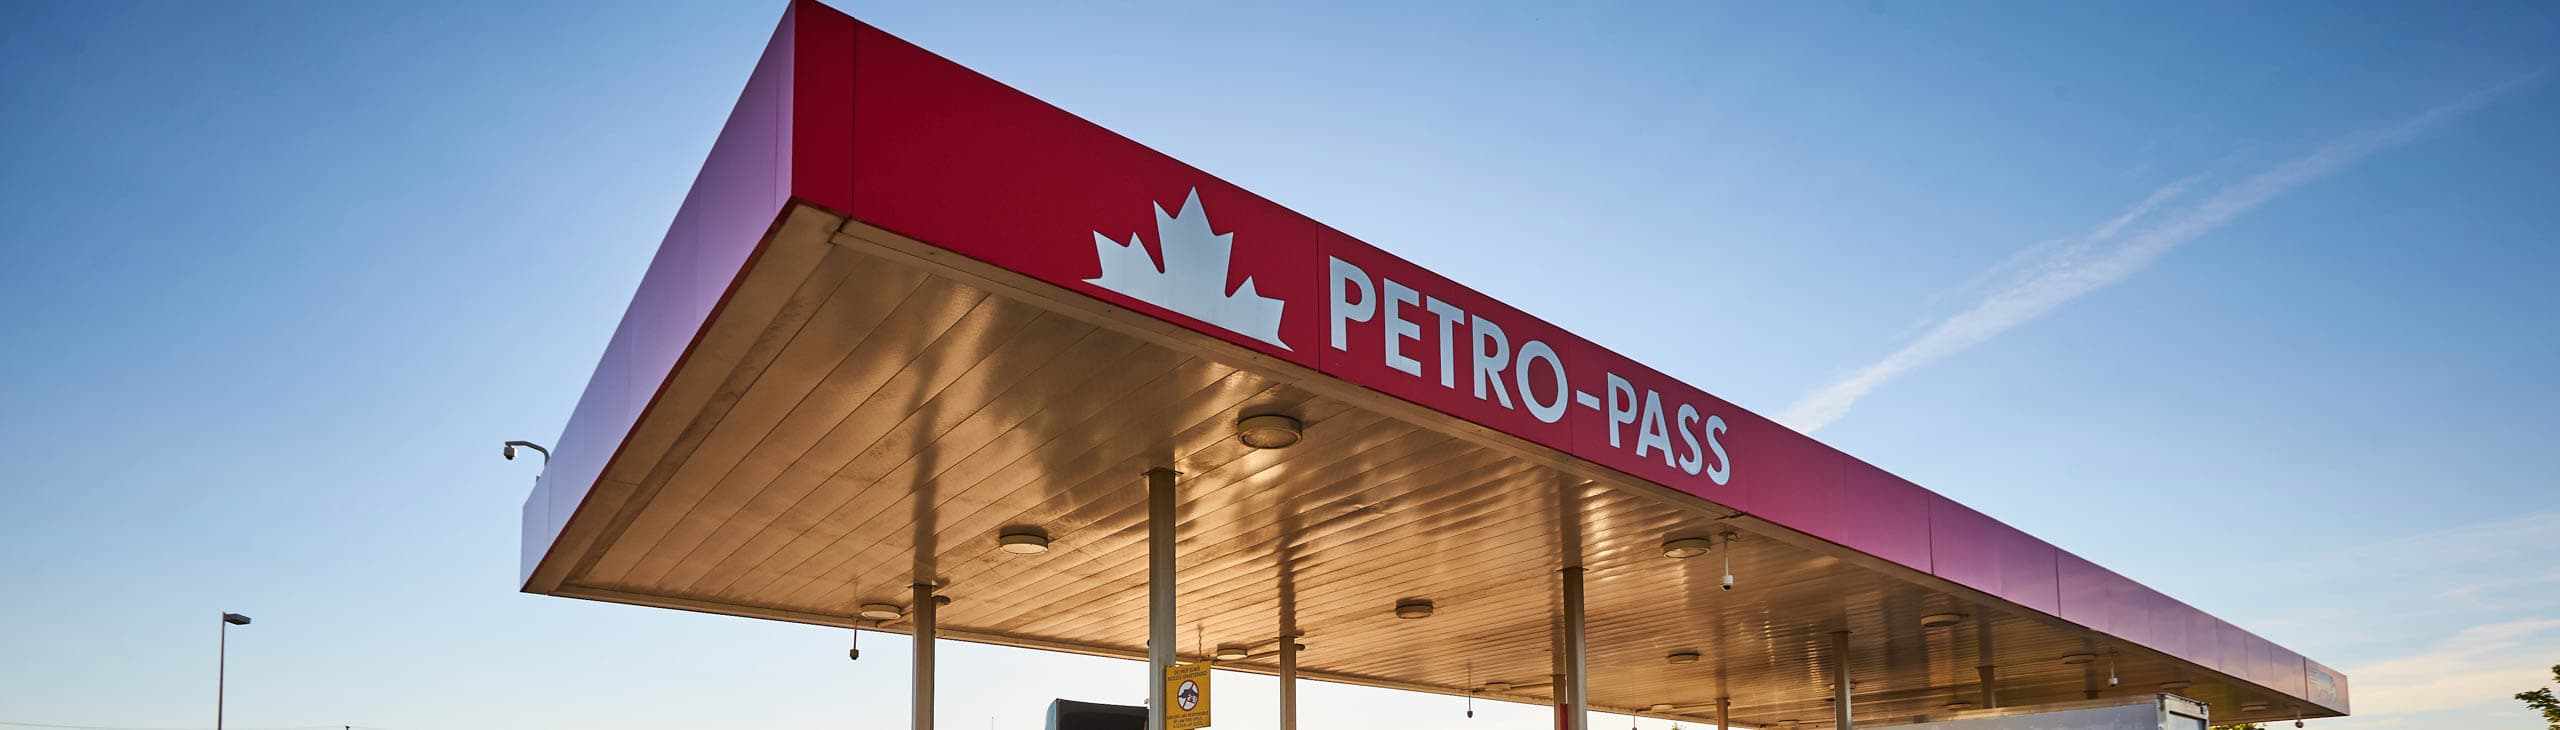 Petro-Pass Cardlock - Truck Stop Network | Petro-Canada